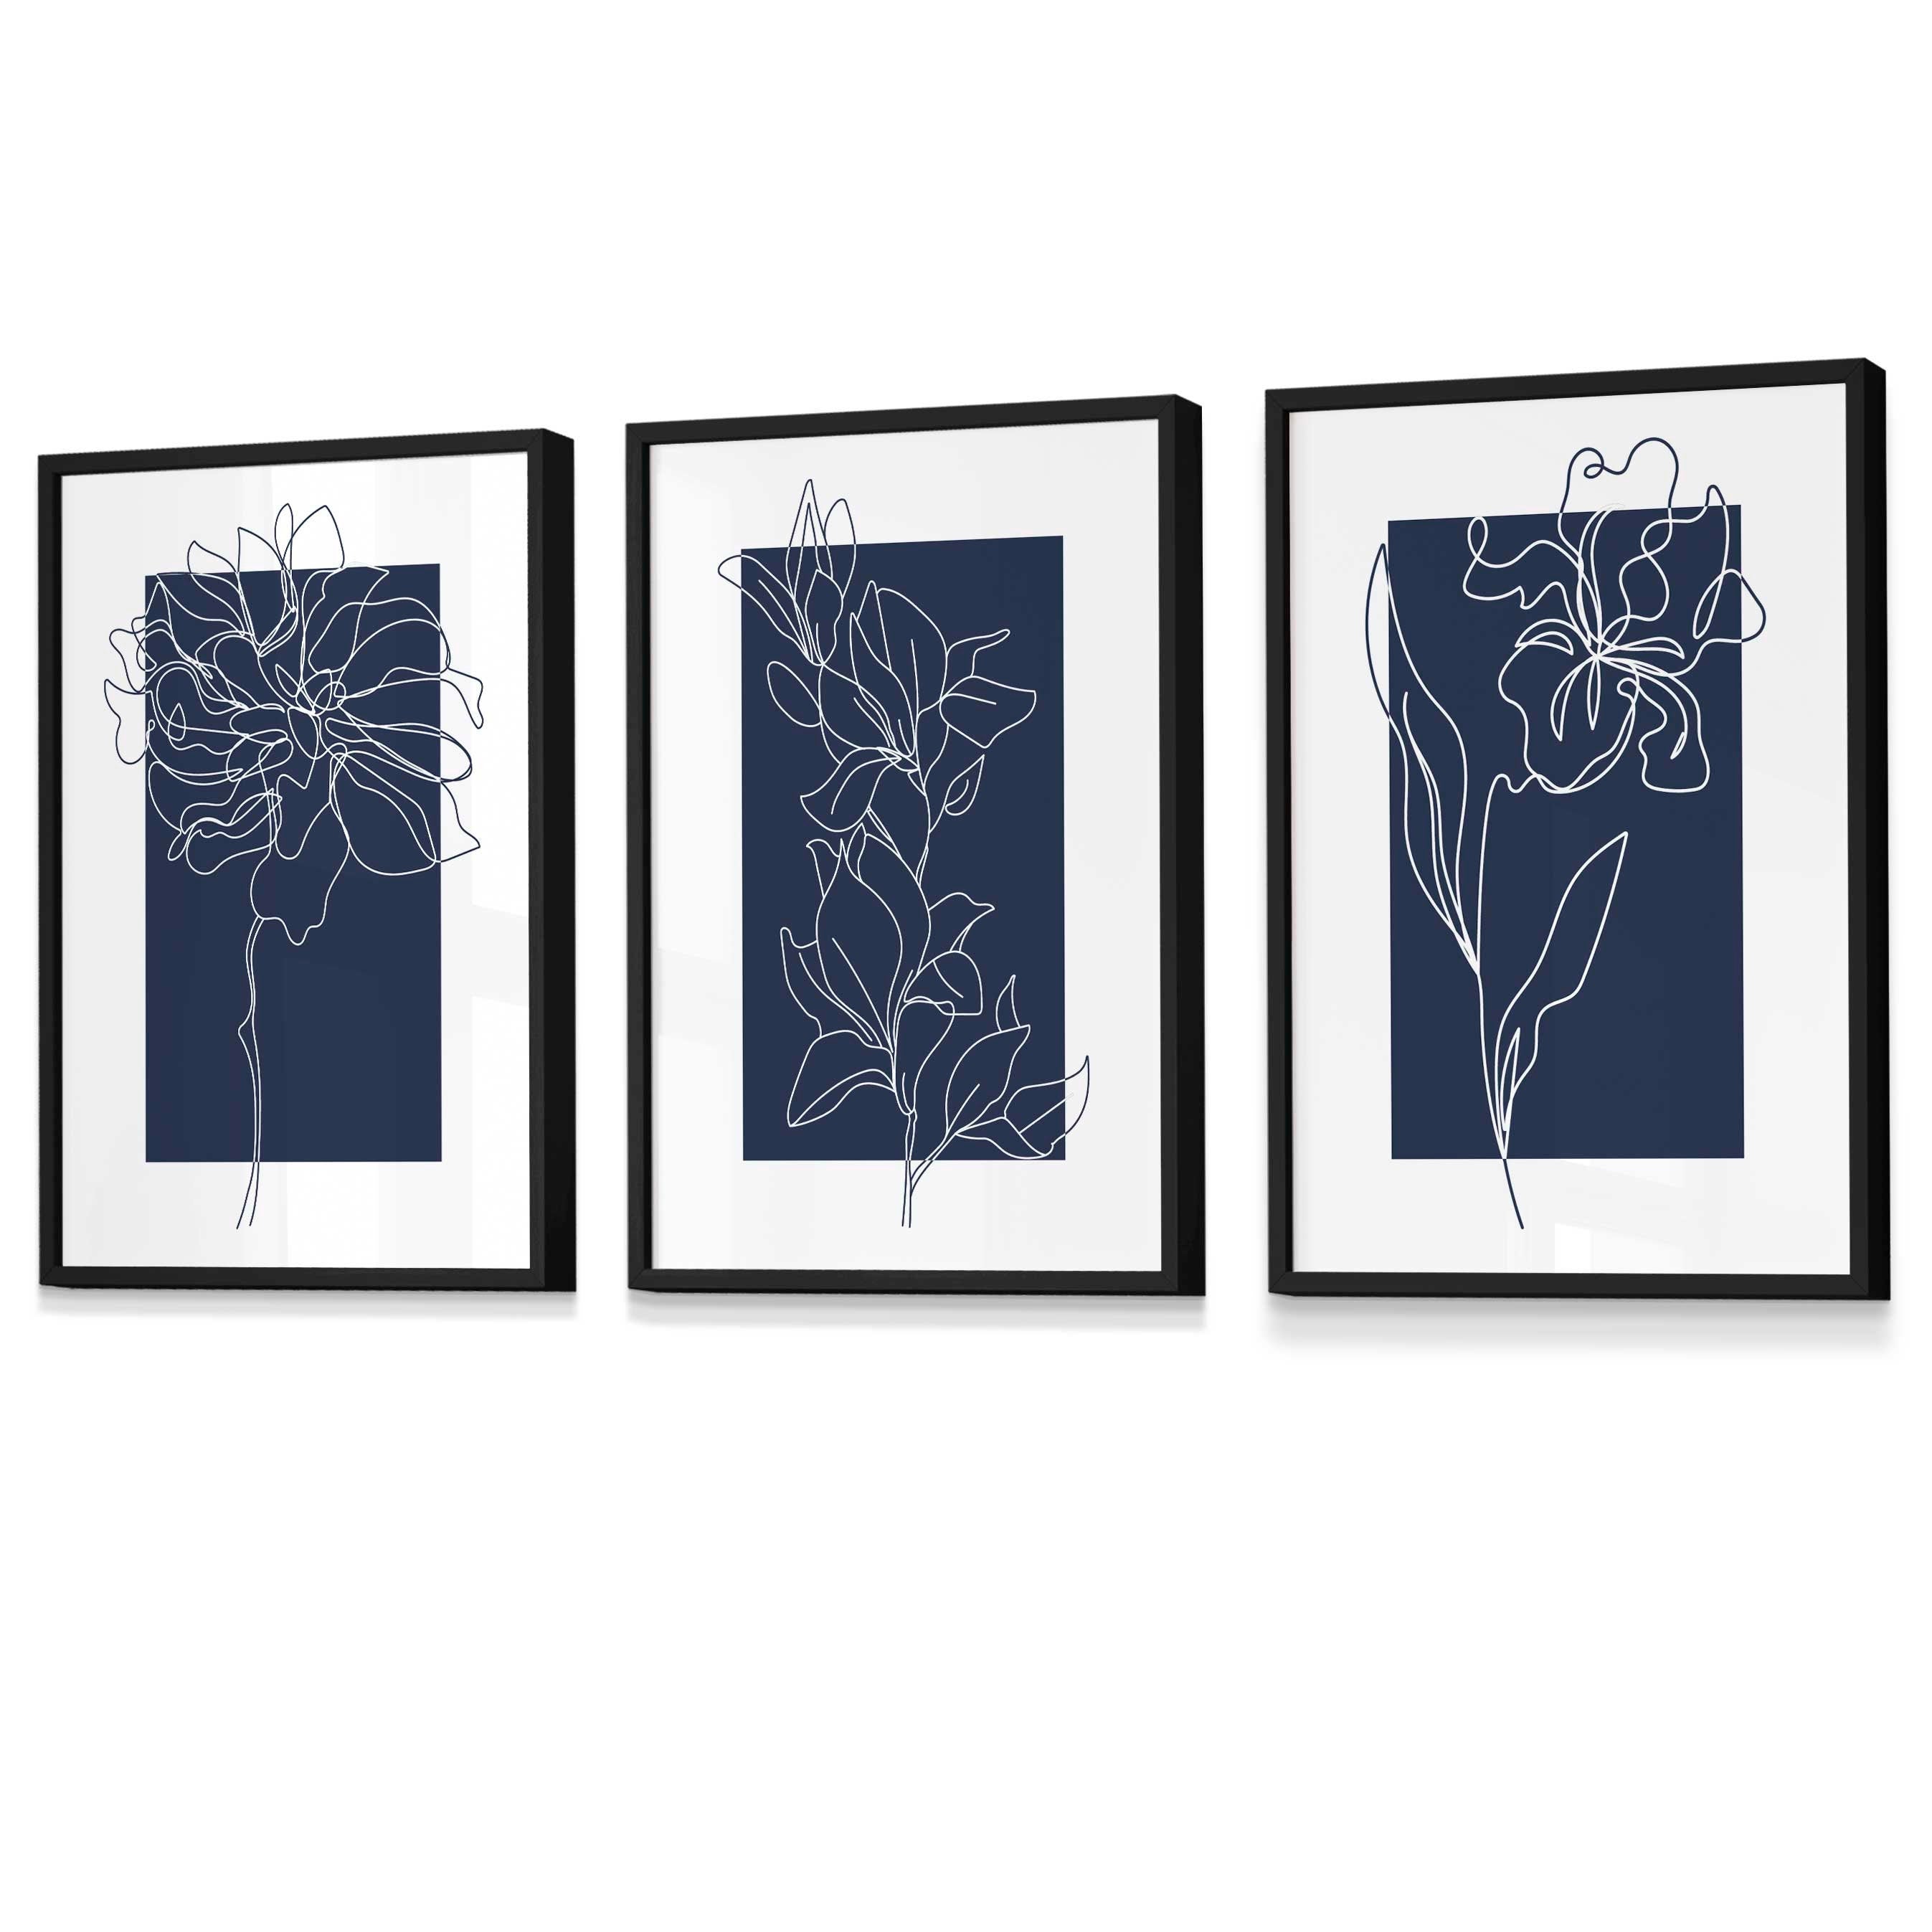 Blue Wall Prints, Set of 3 Prints, Botanical Wall Prints, Plant Wall Art, Botanical Line Art, Blue Home Decor, Hand Drawn Flowers Navy Blue